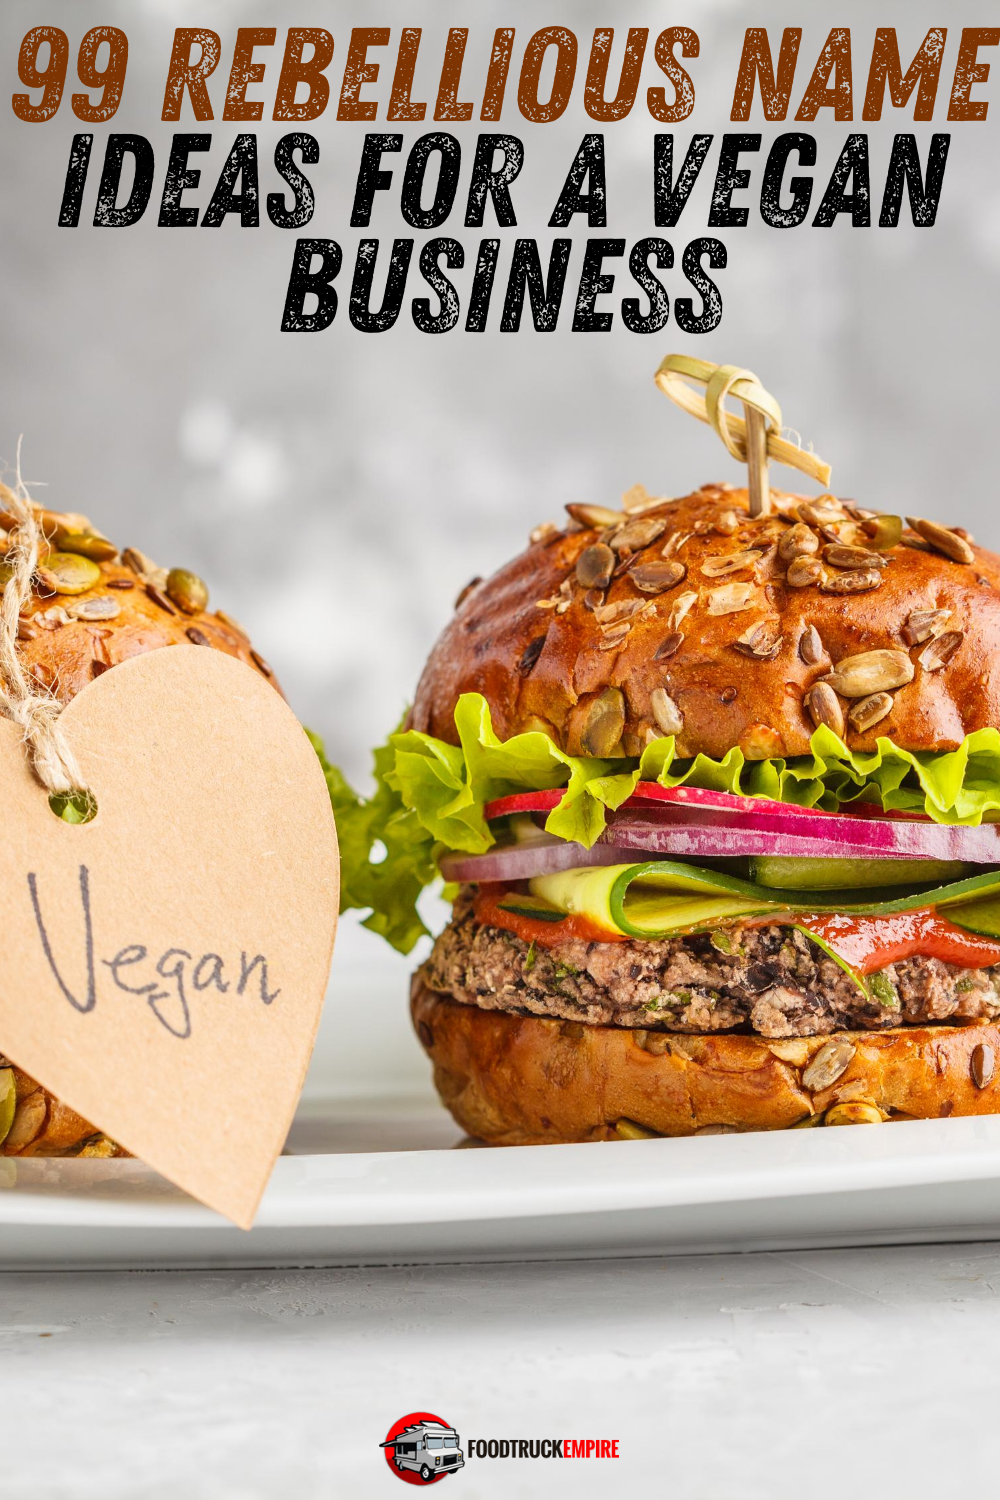  Rebellious Name Ideas For A Vegan Business - Vegan Food Business Name Ideas